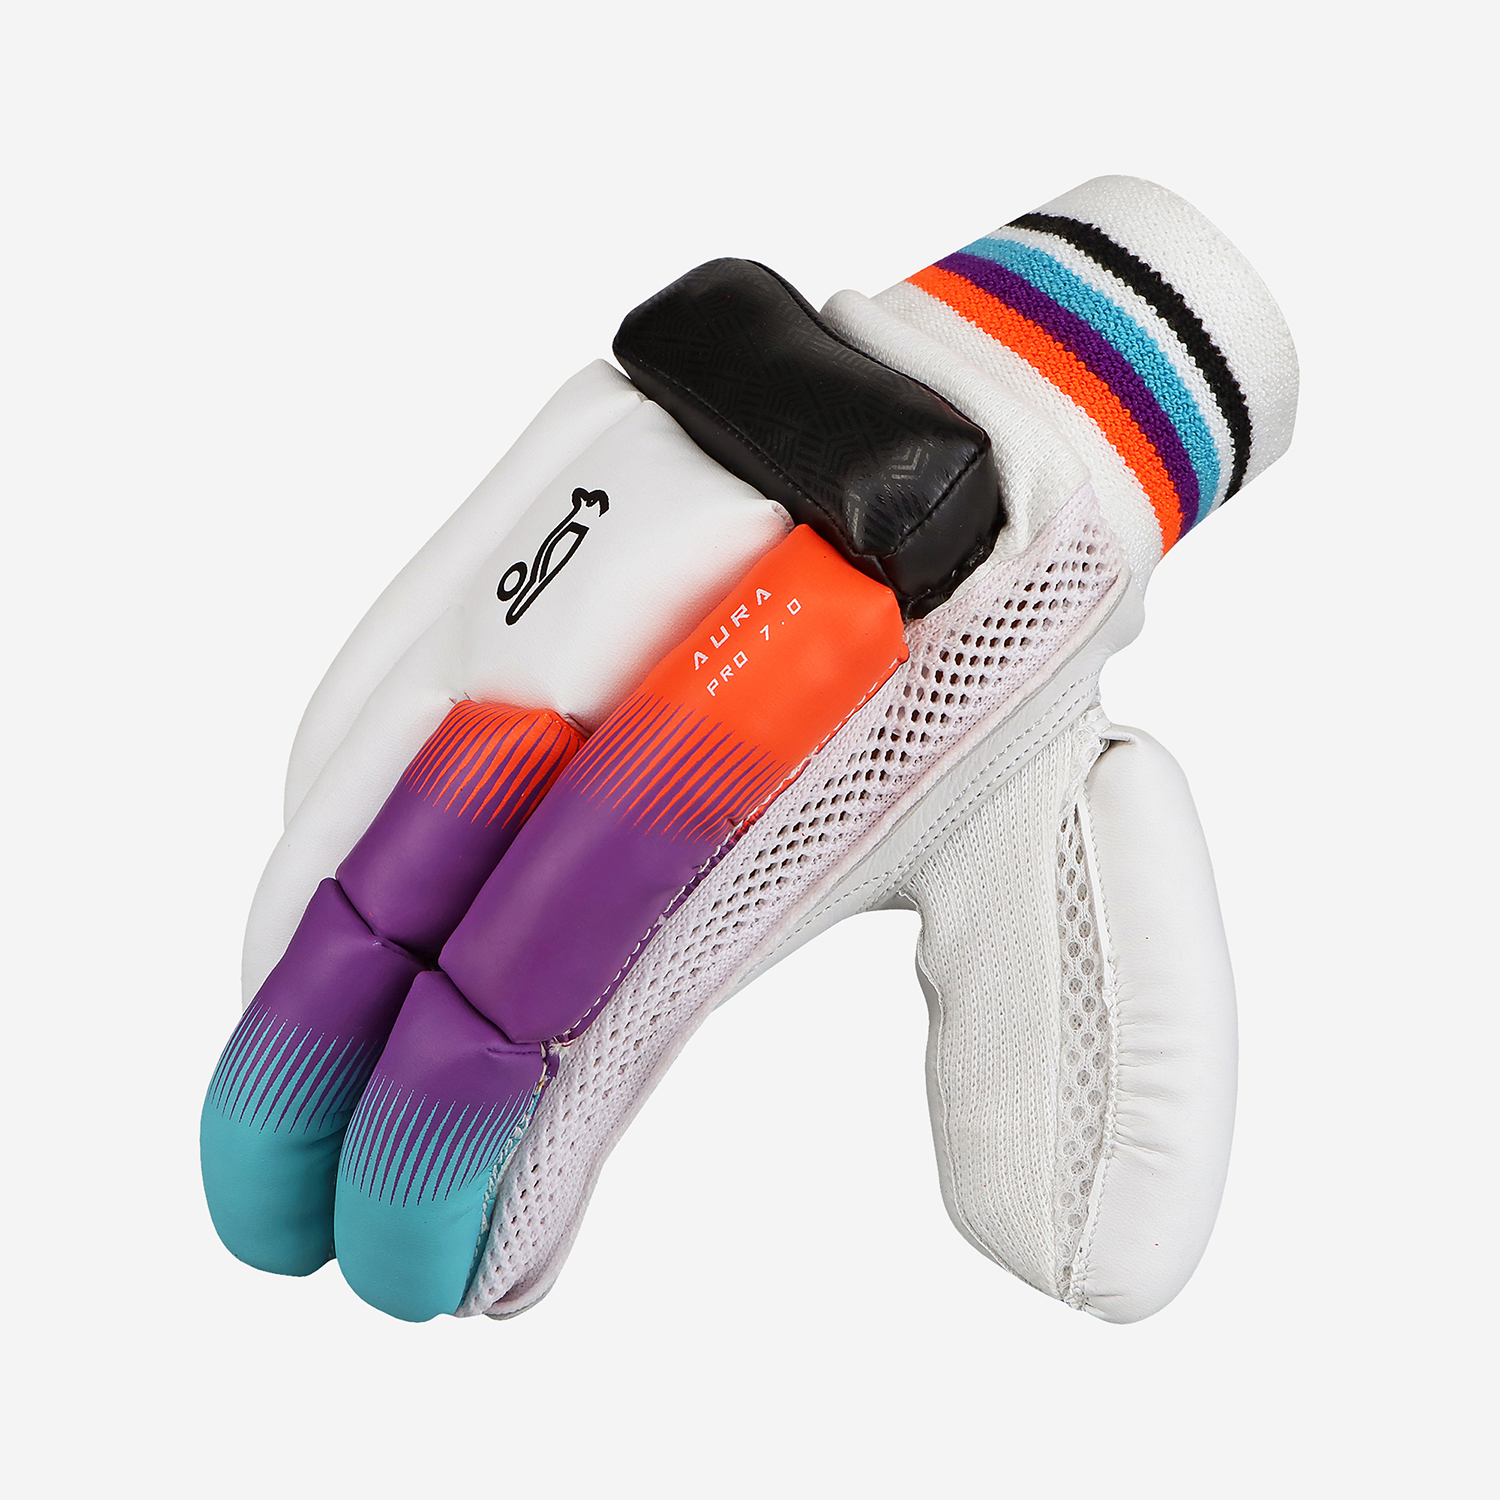 Pro 7.0 Aura Batting Gloves